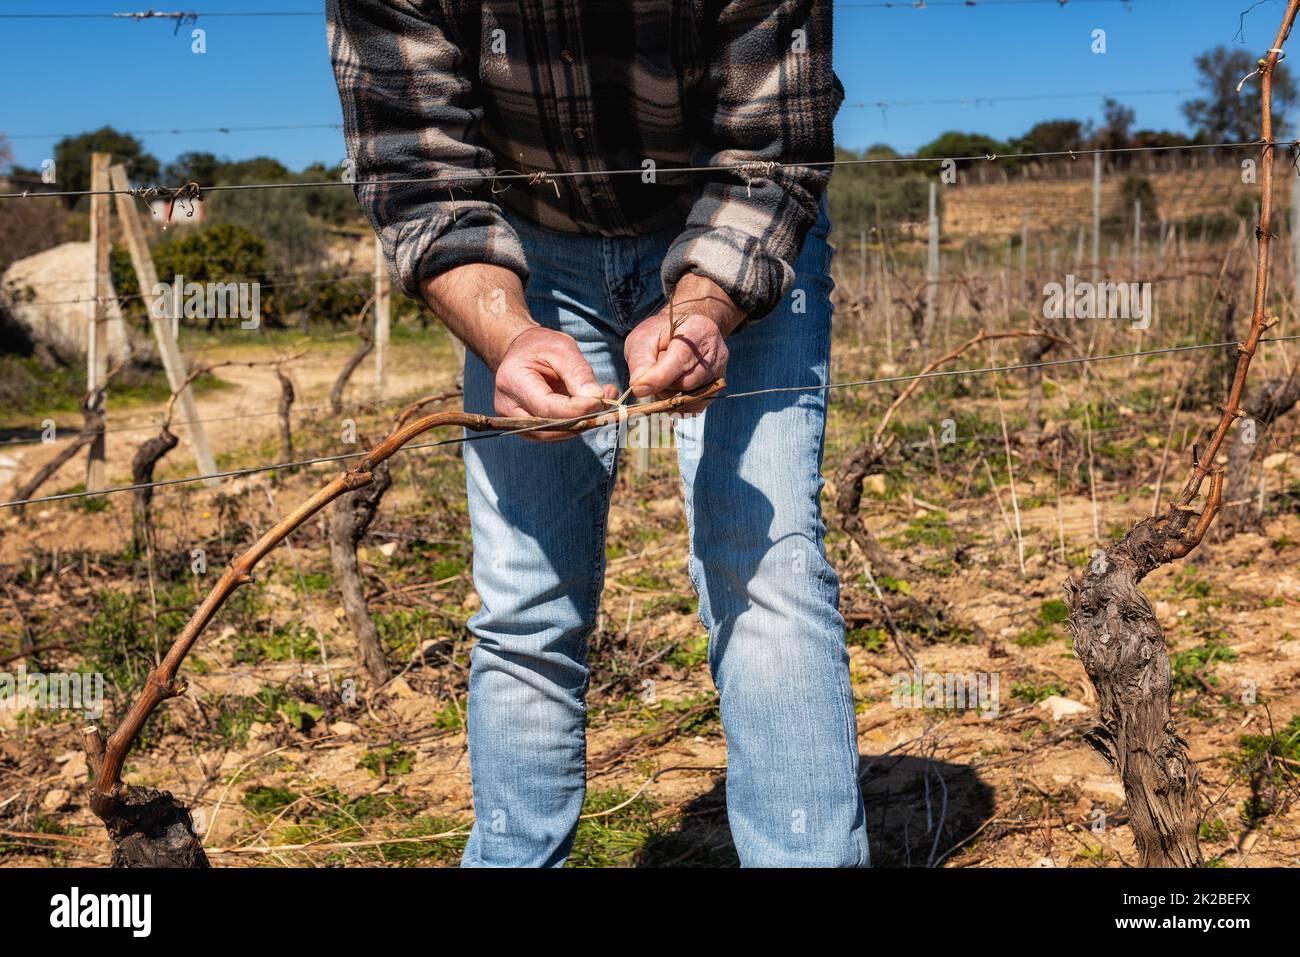 https://c8.alamy.com/comp/2K2BEFX/farmer-pruning-the-vine-in-winter-agriculture-2K2BEFX.jpg